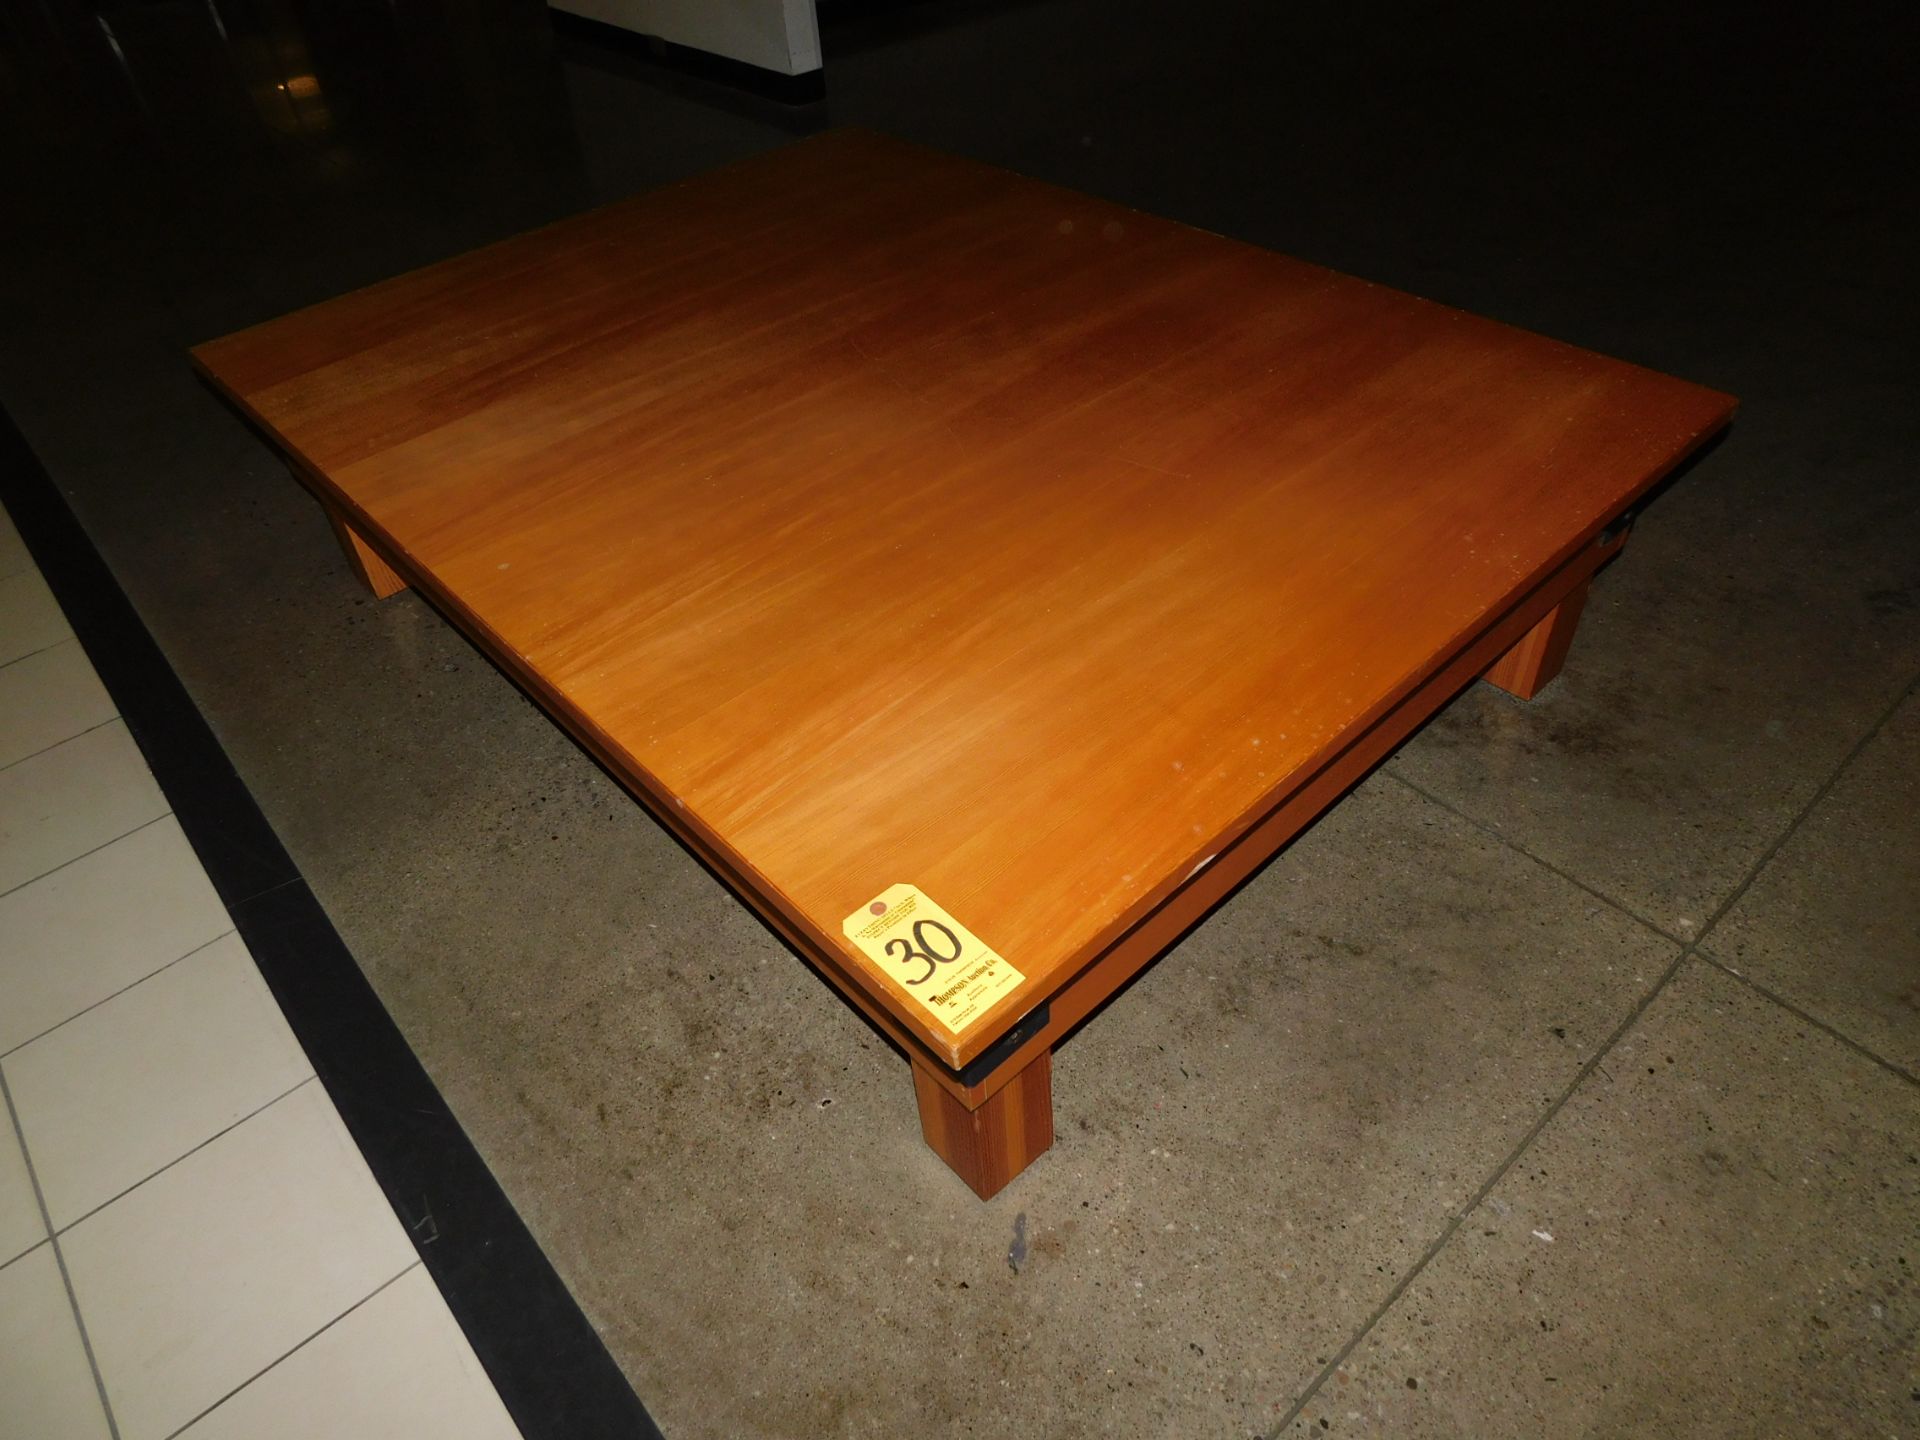 Wood Table, 54" x 72" x 18.5" H